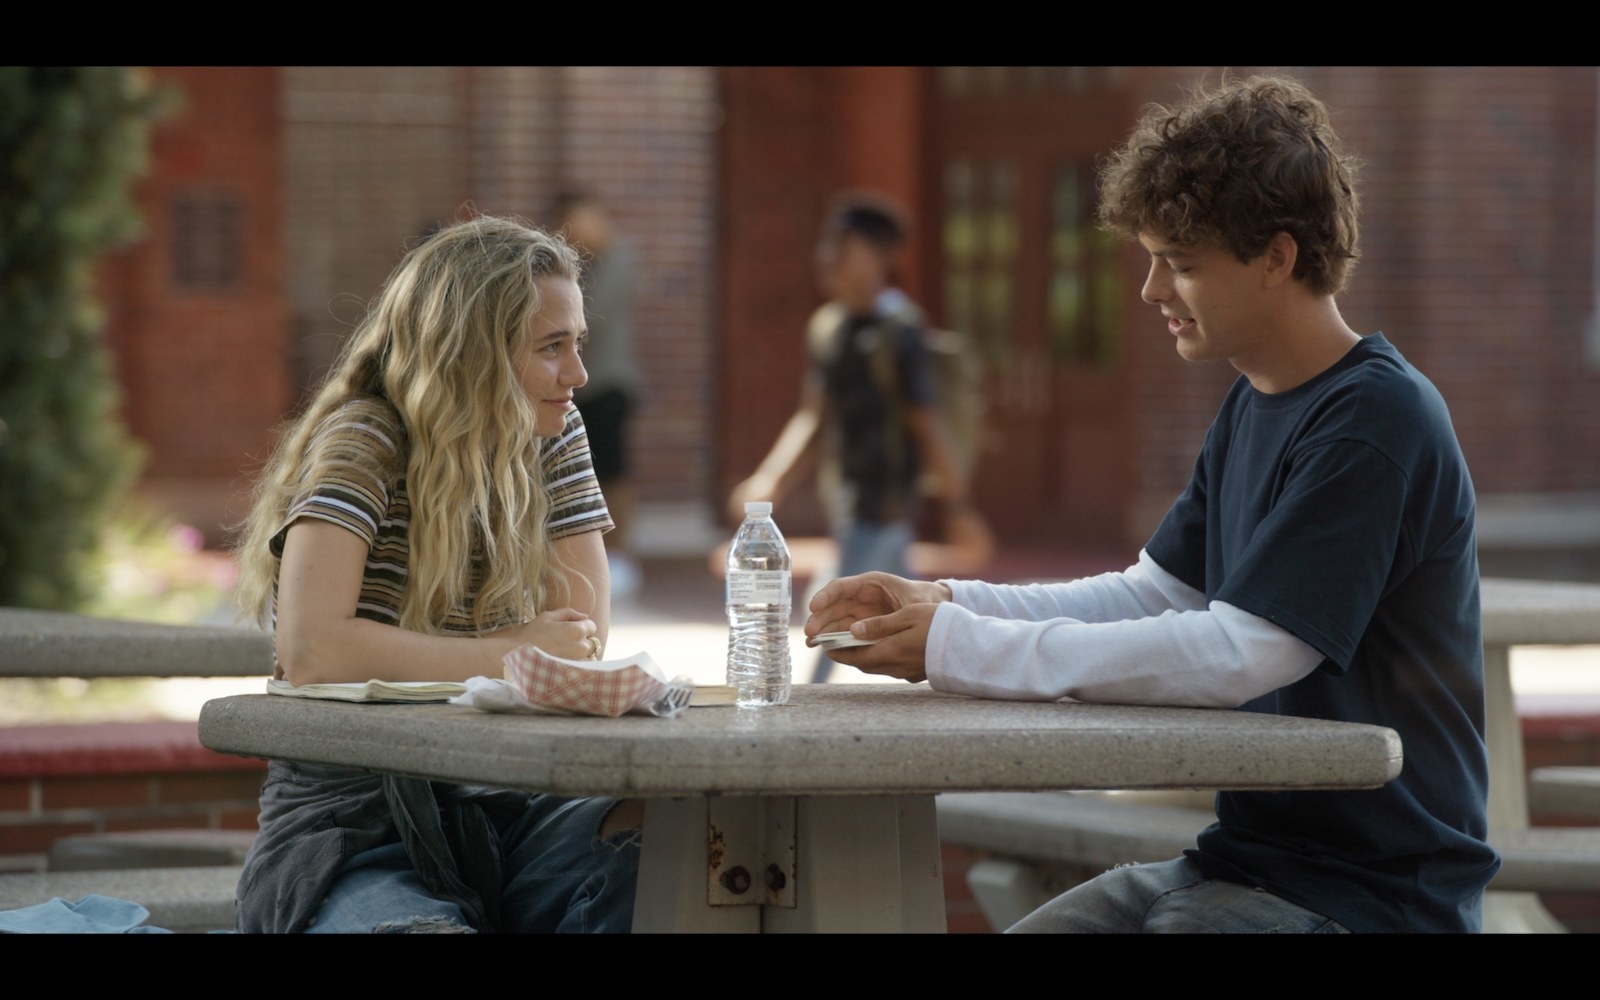 Rain (Madison Iseman) and Caleb (Israel Broussard) sit at a picnic table outside.